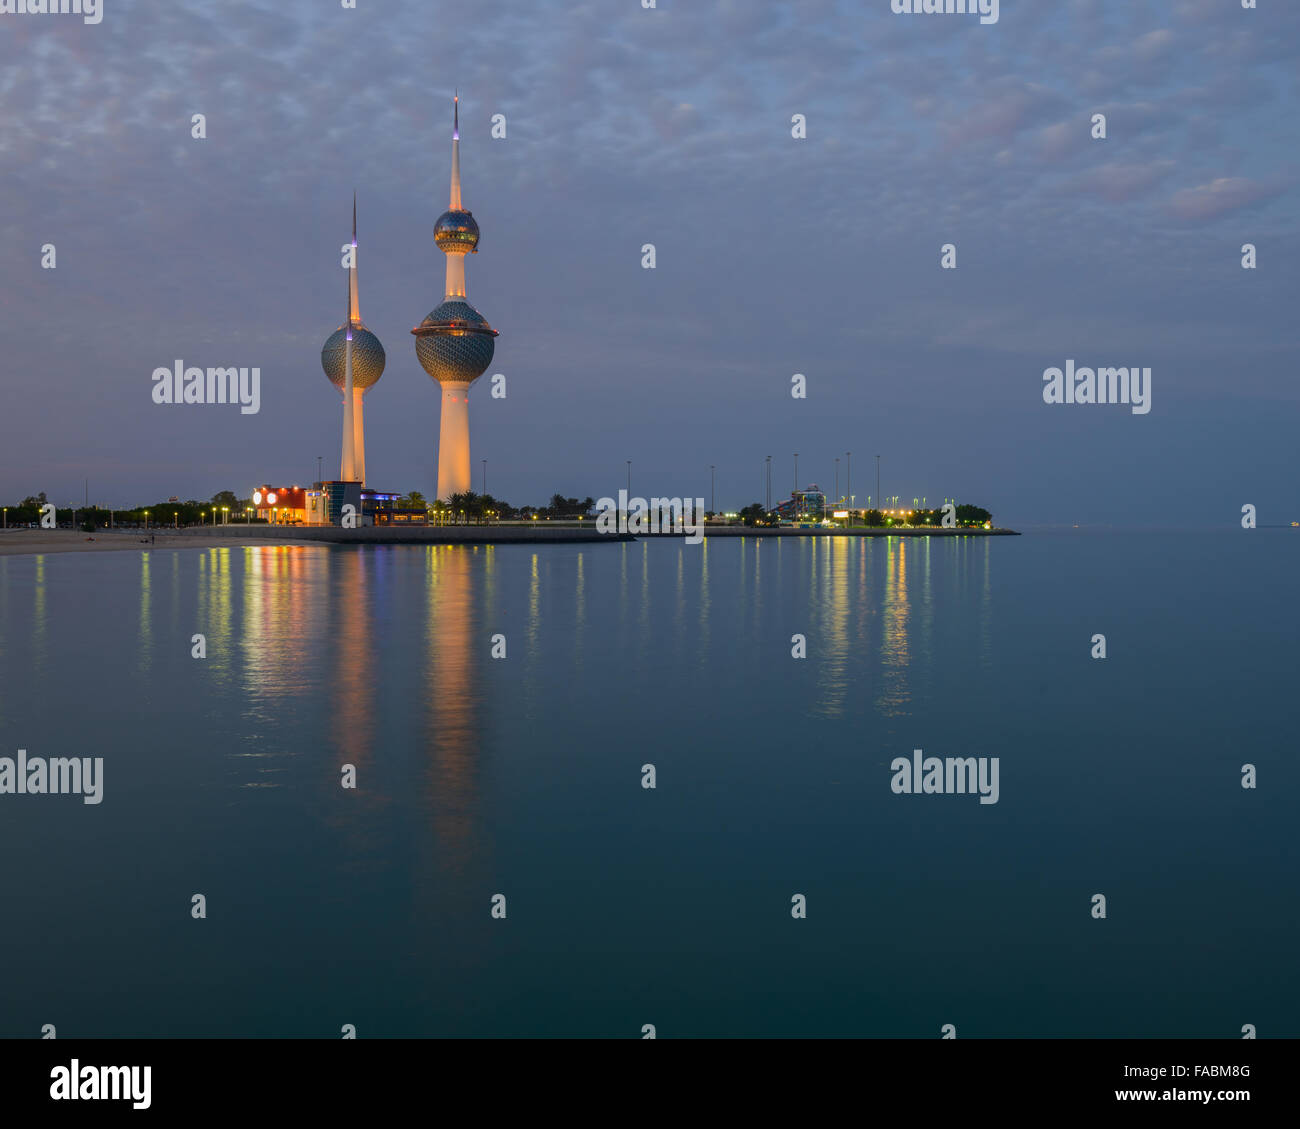 Kuwait Towers at night Stock Photo